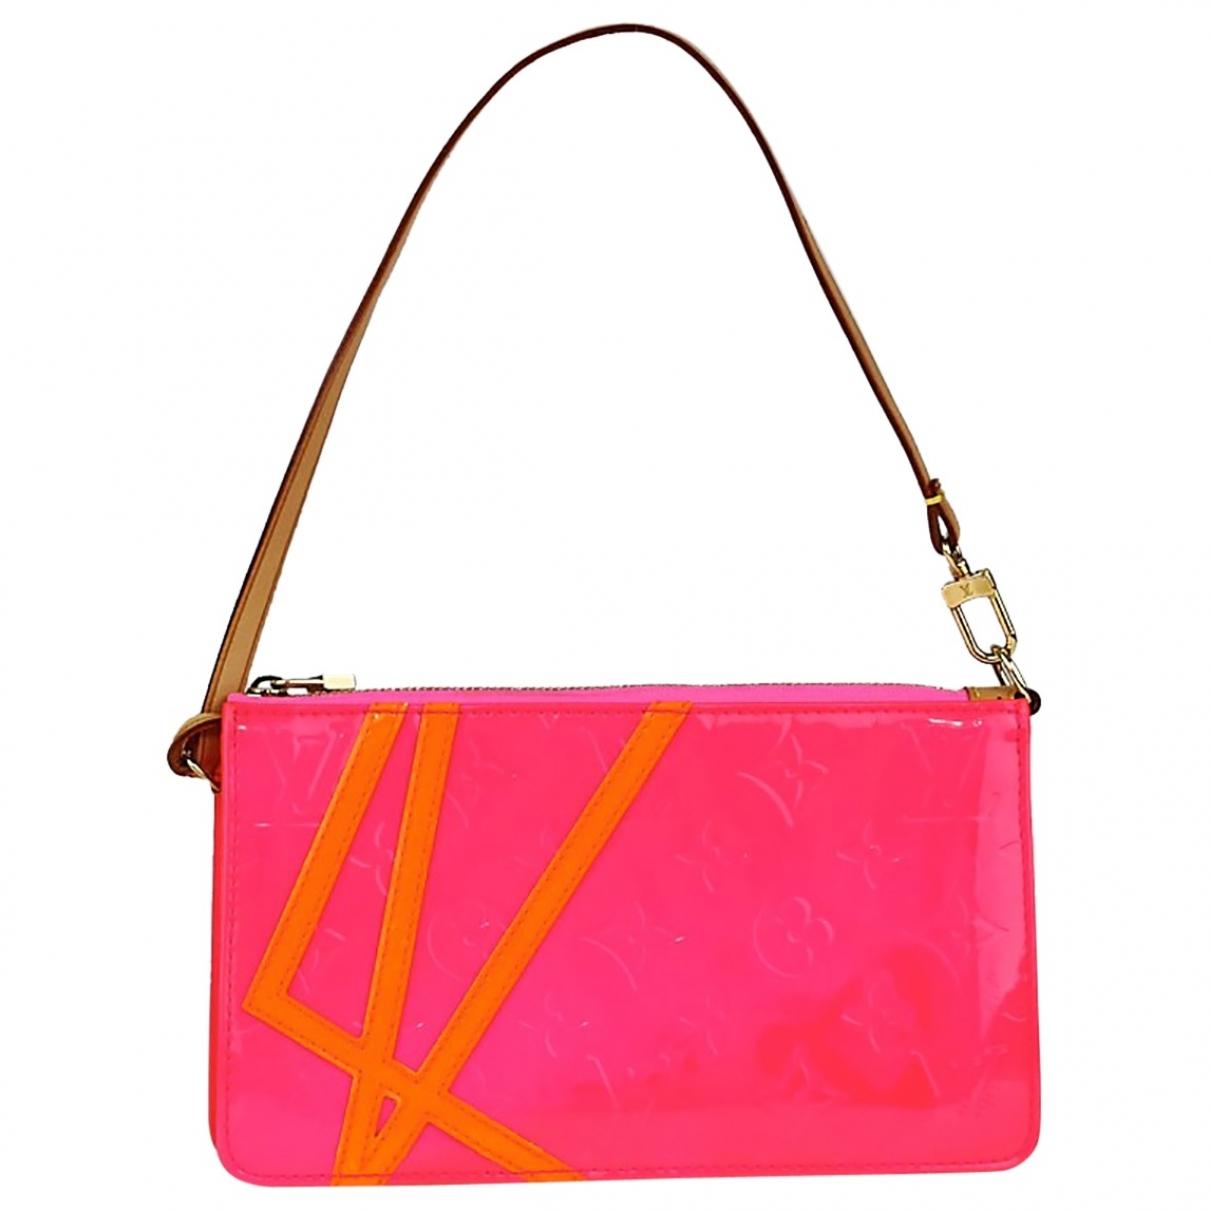 Louis Vuitton Vintage Pink Patent Leather Handbag in Pink - Lyst